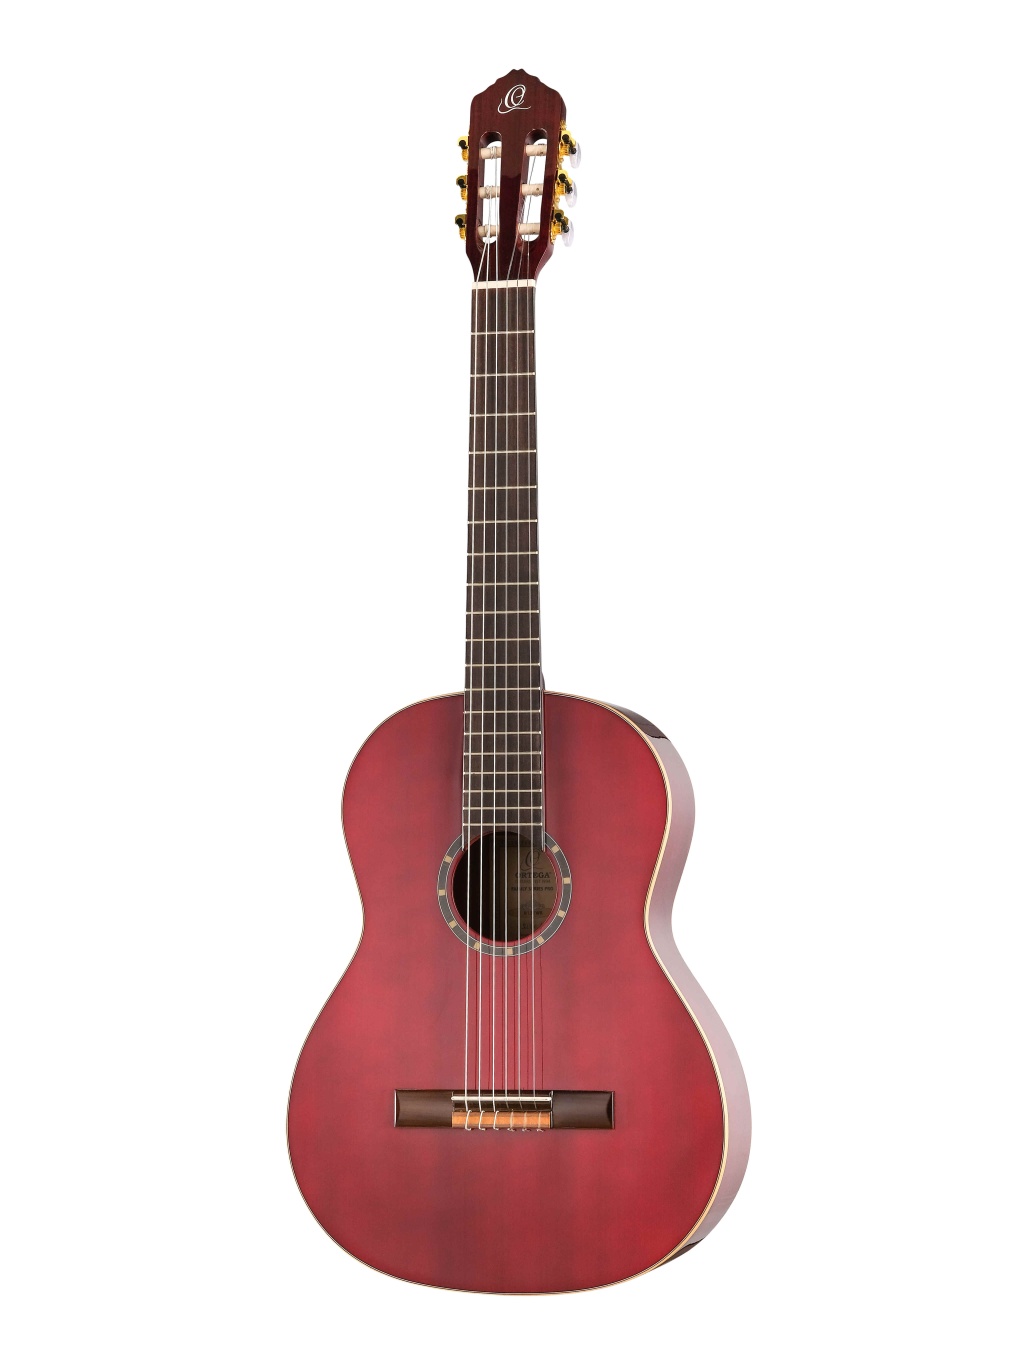 R131WR Family Series Pro Классическая гитара, размер 4/4, глянцевая, Ortega